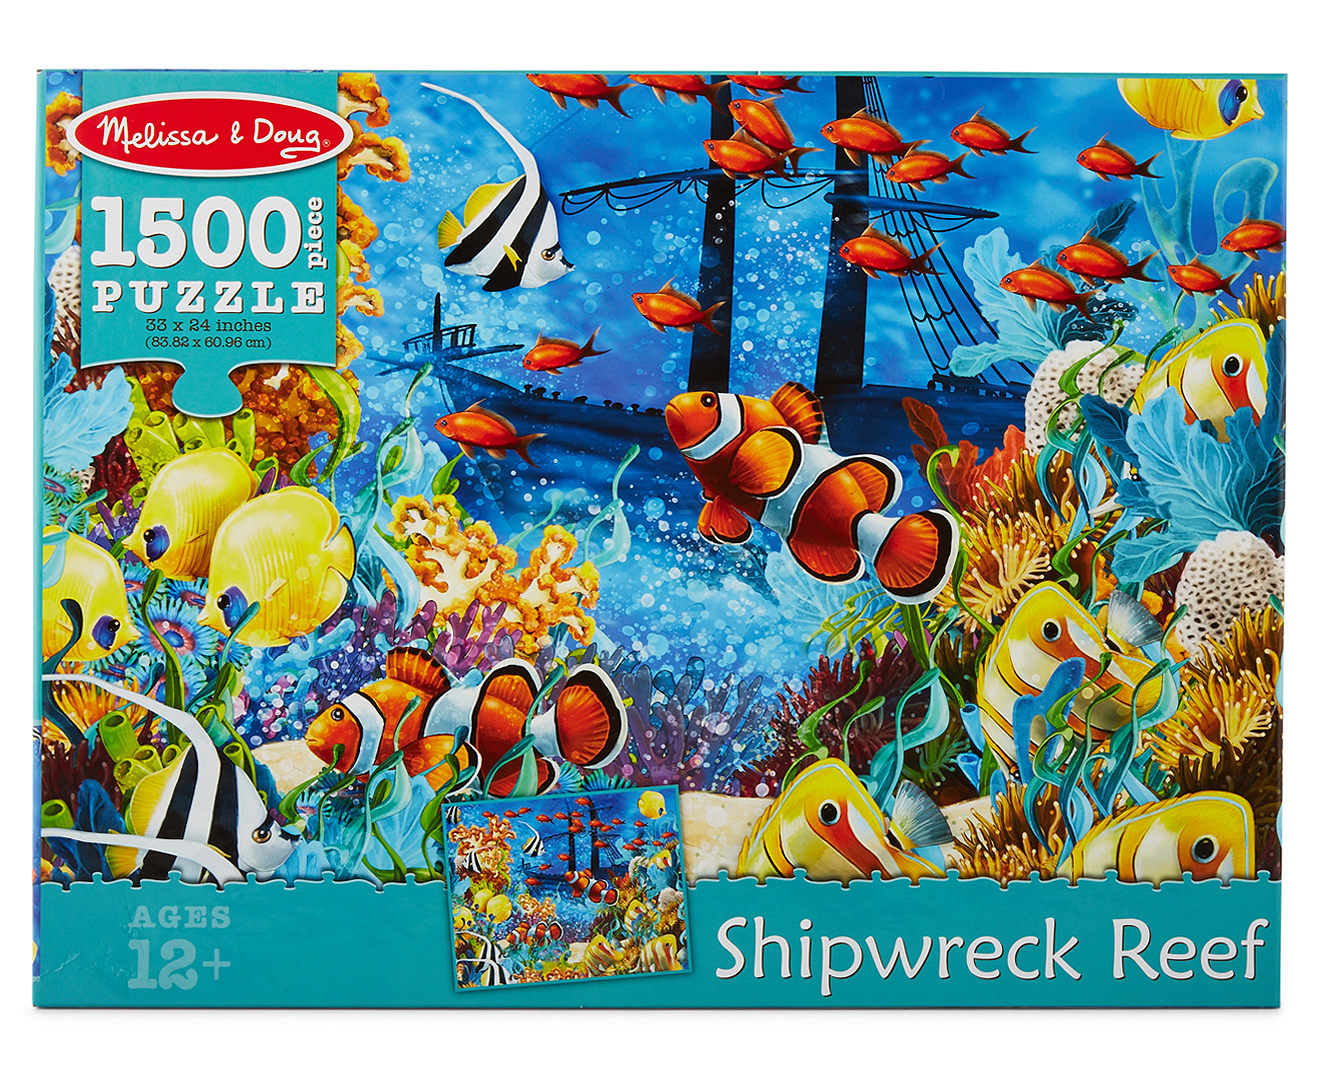 Melissa & Doug Shipwreck Reef Jigsaw Puzzle